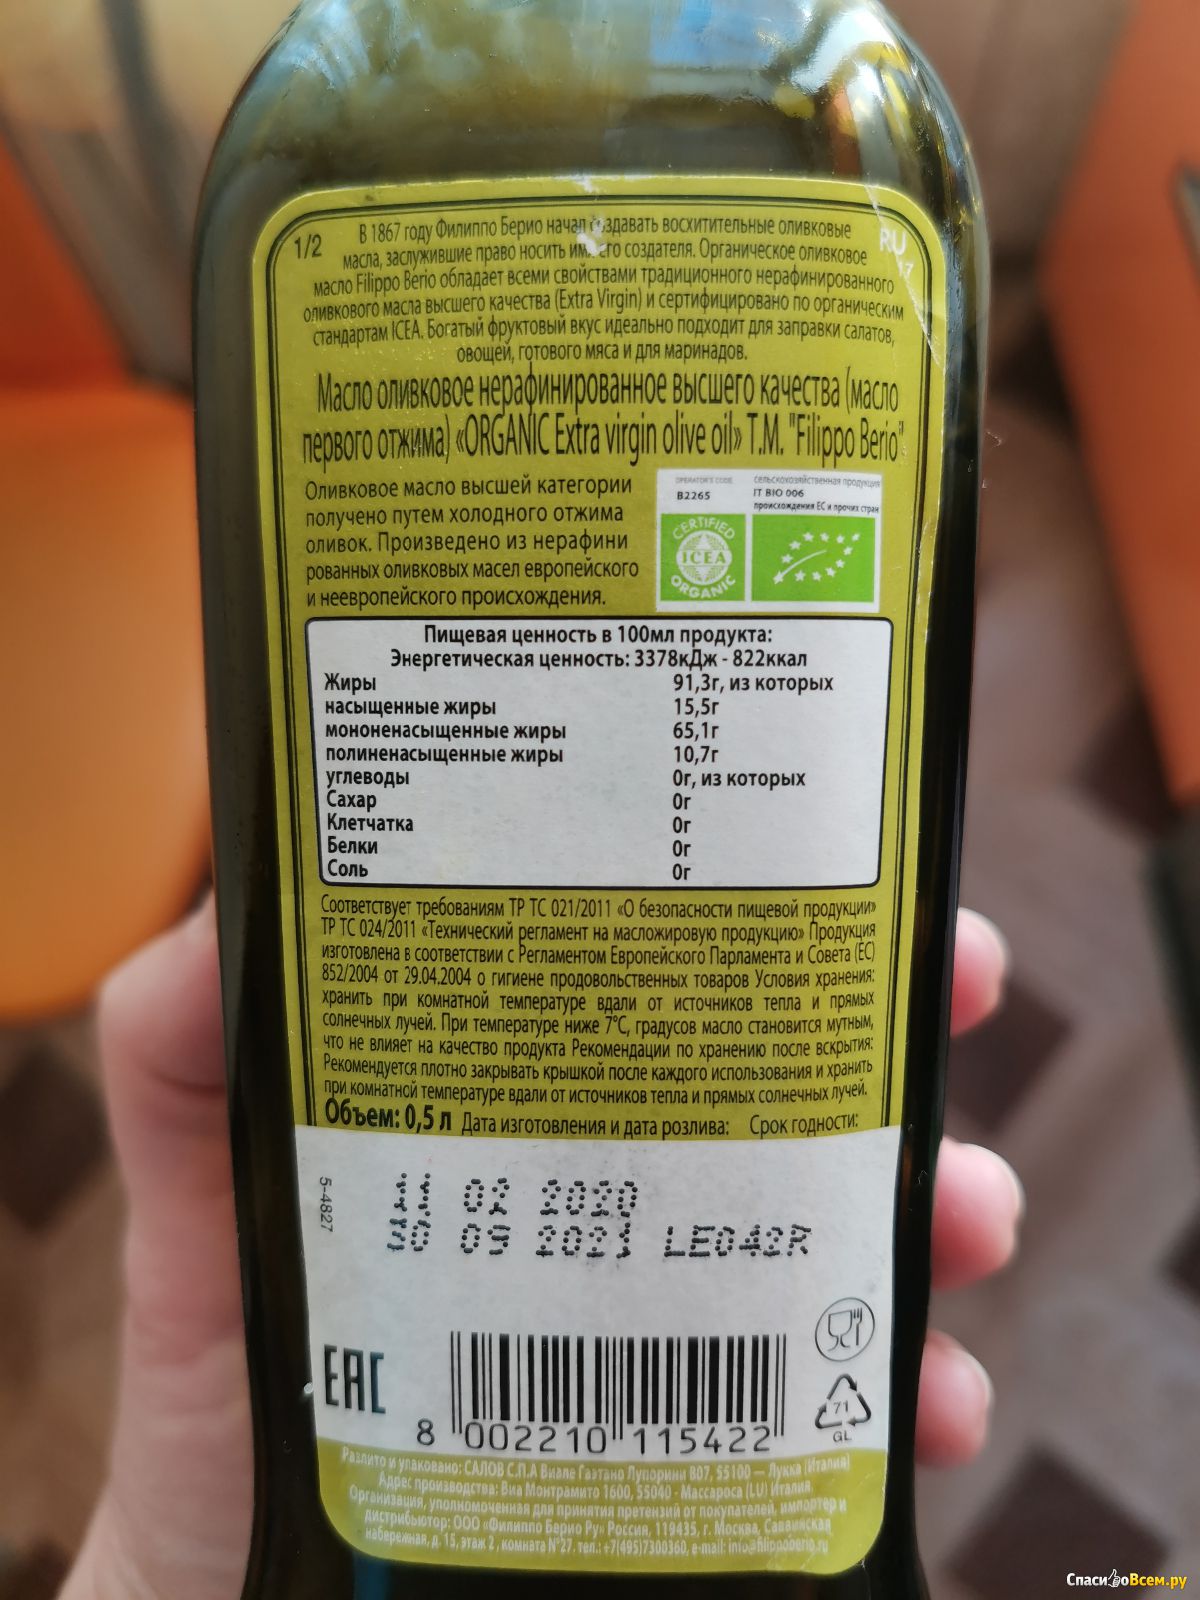 Оливковое масло после срока годности